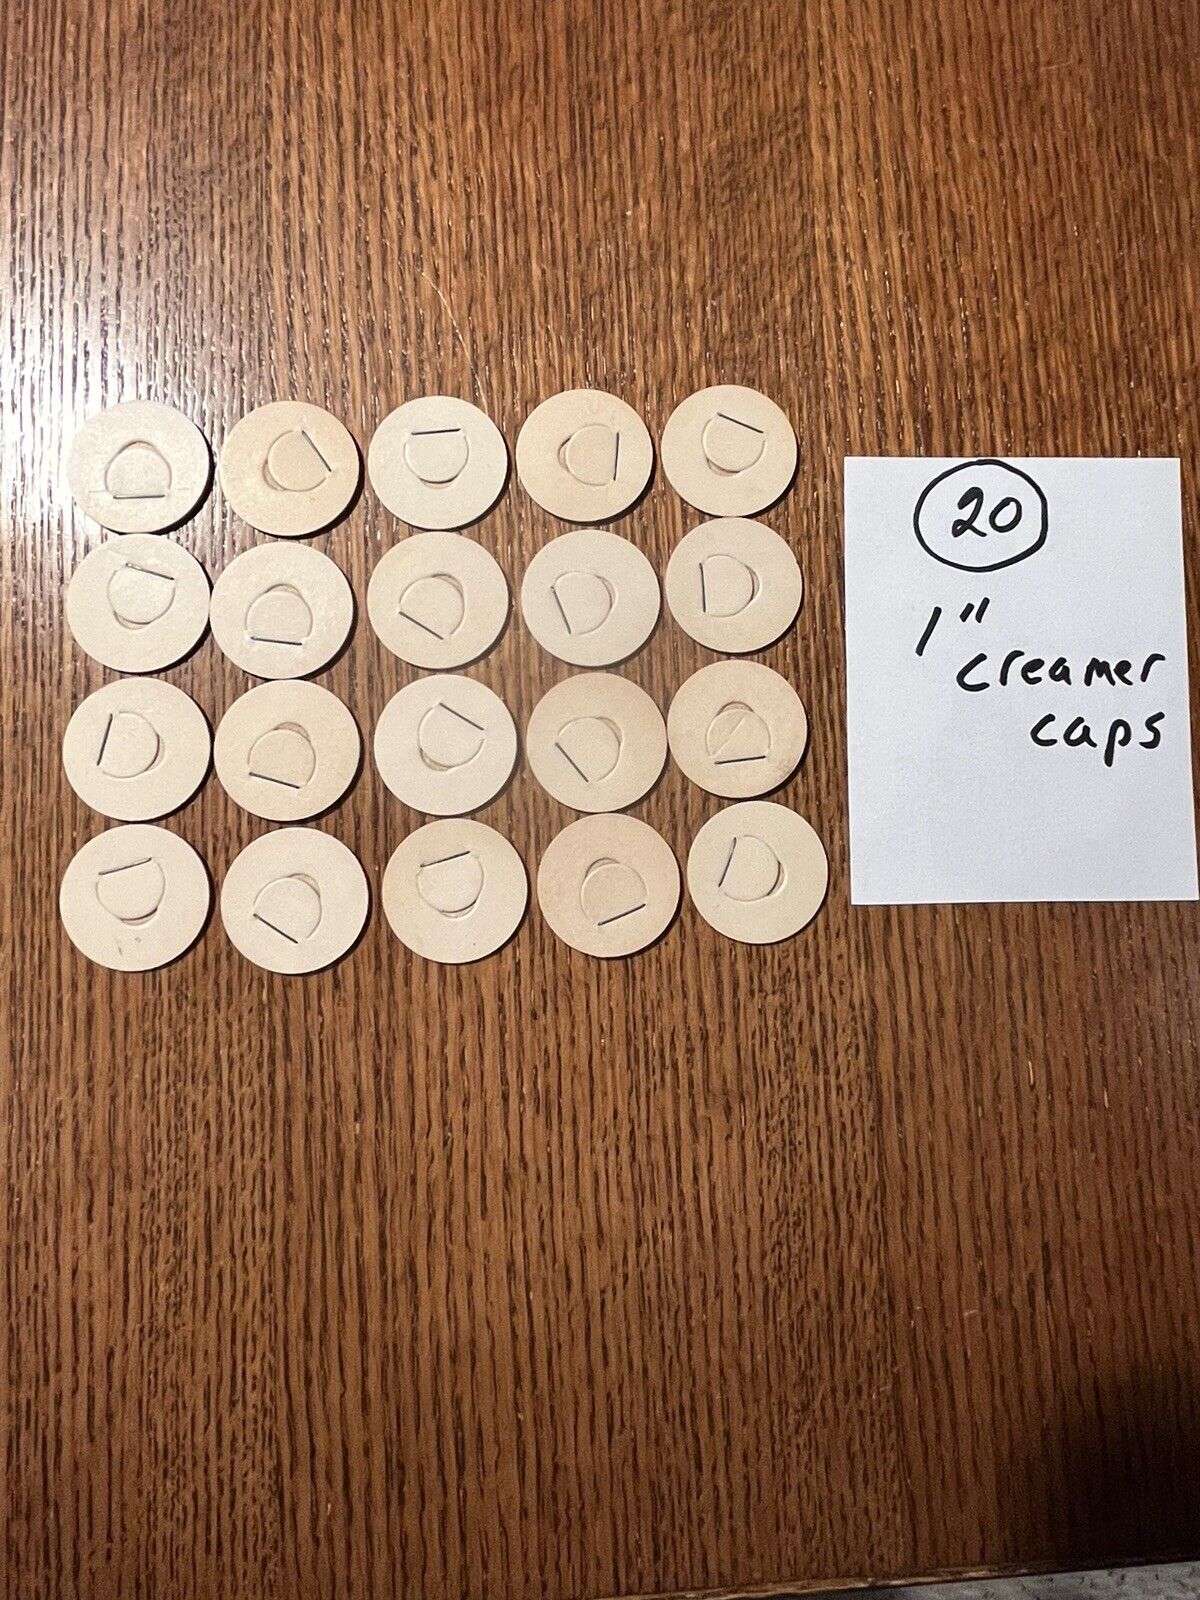 Lot of 20 small creamer caps milk caps 1” in diameter